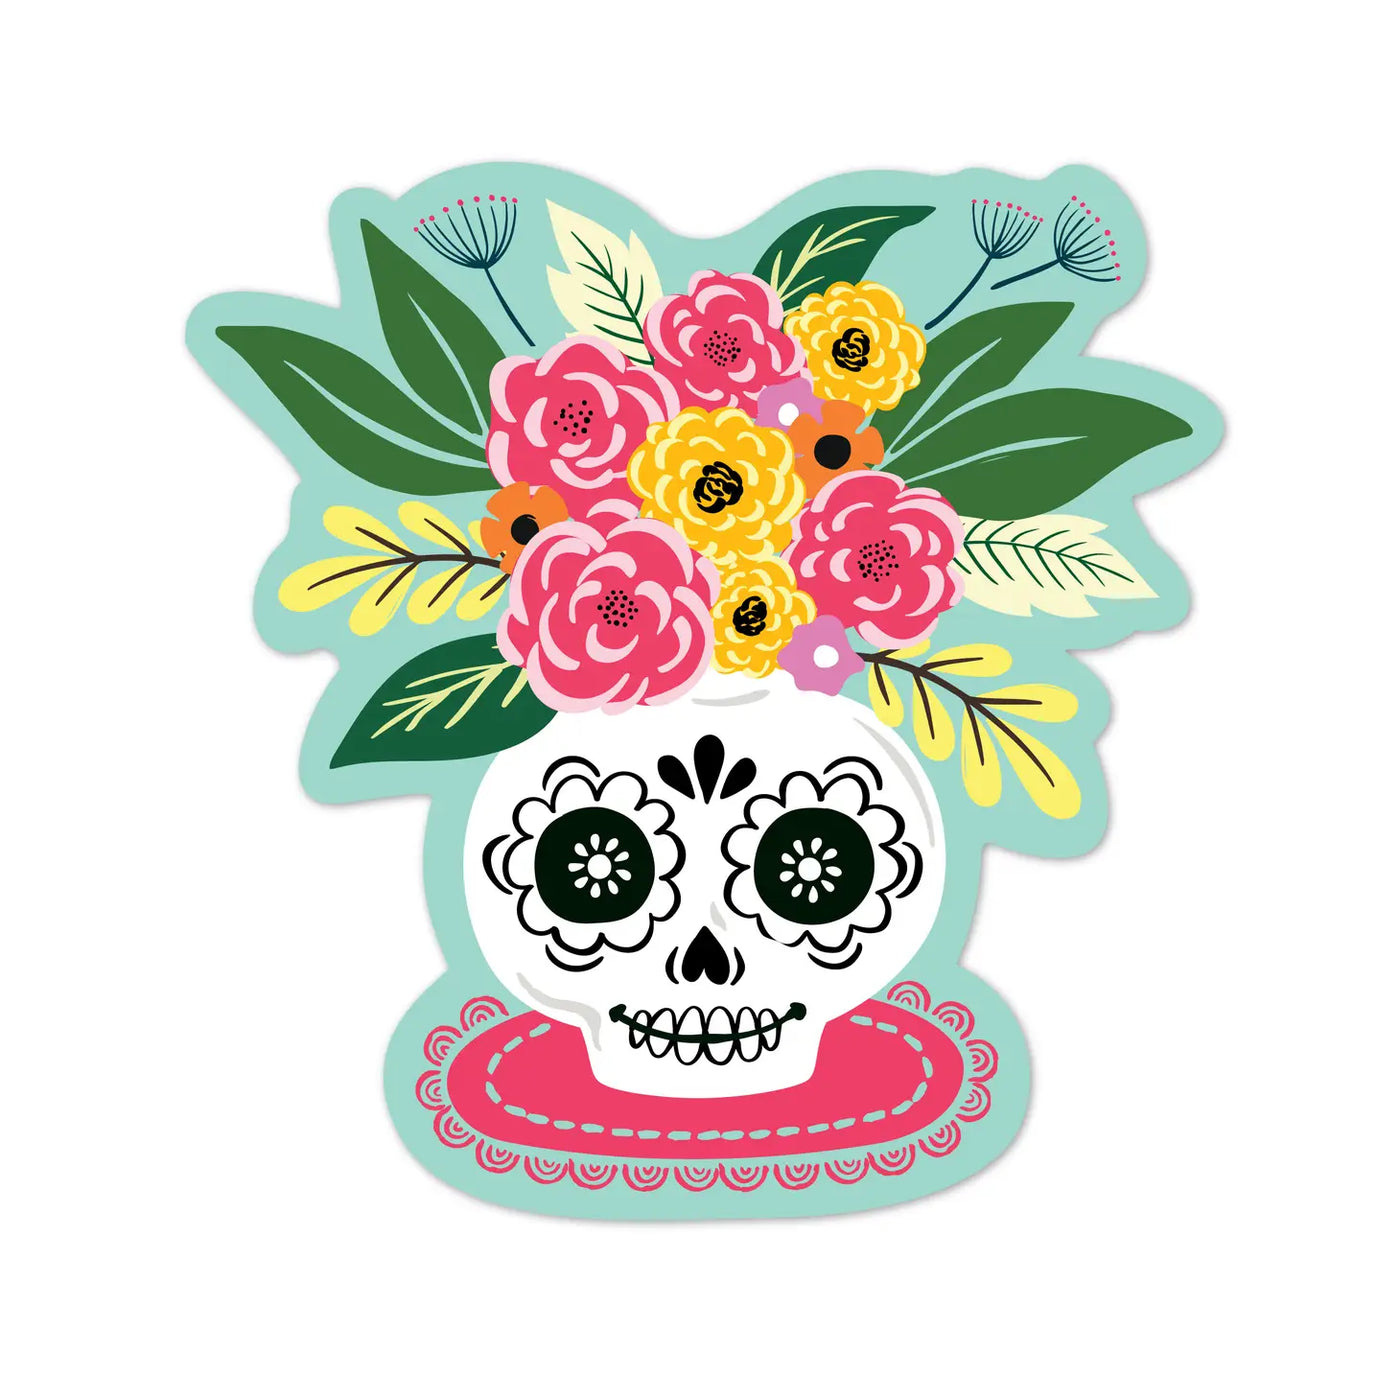 sugar skull flower vase illustration with multi-colored flowers on the top of skull